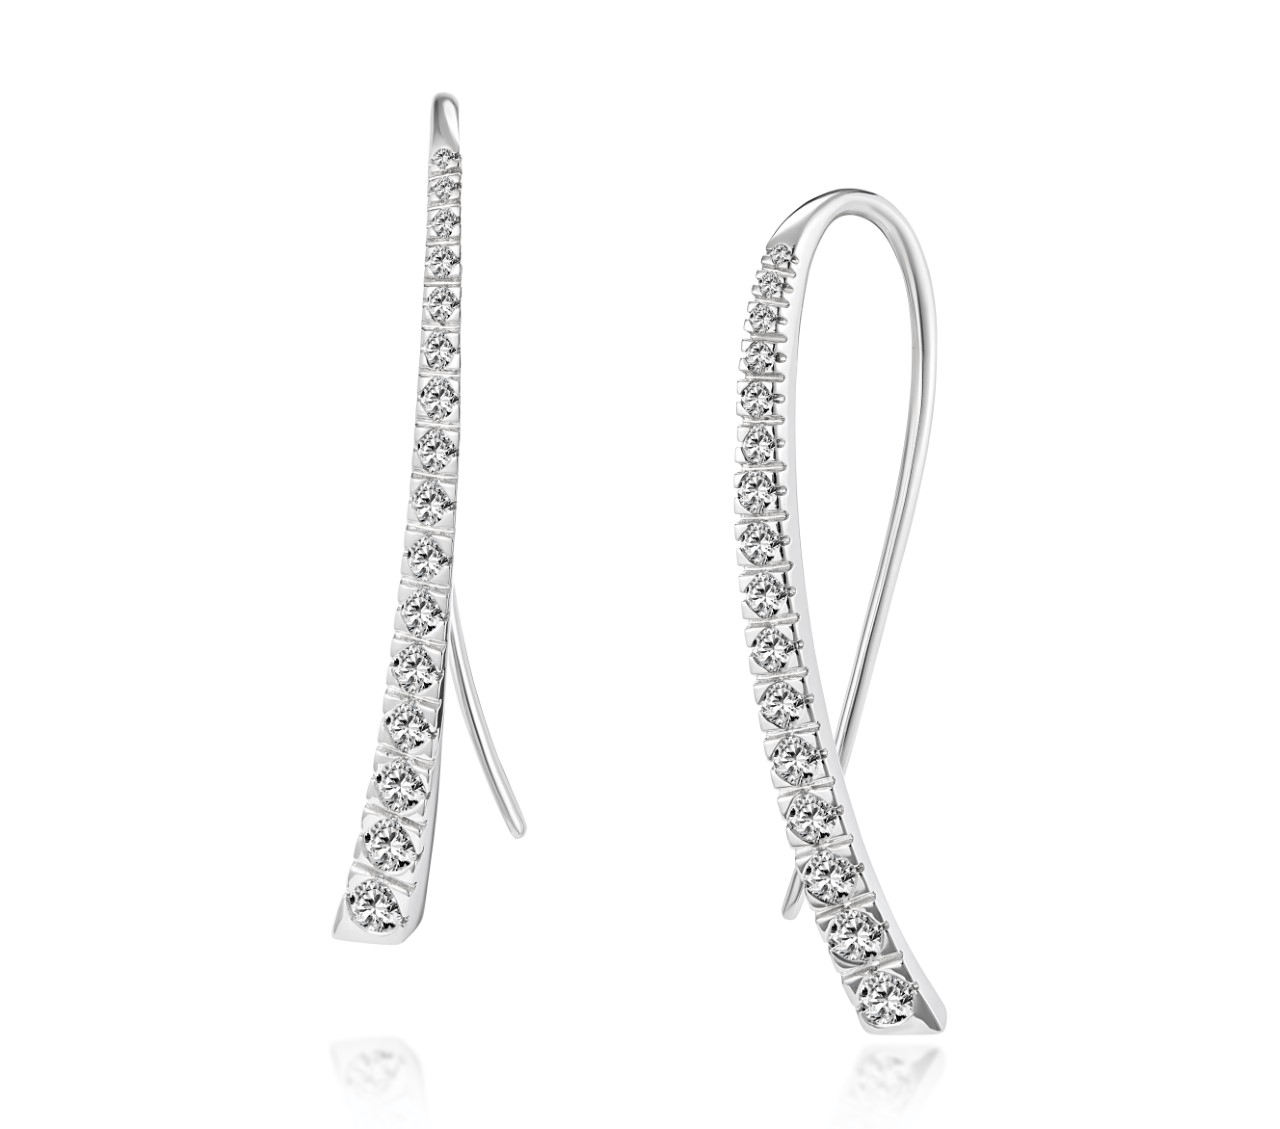 Evening dress diamond earrings